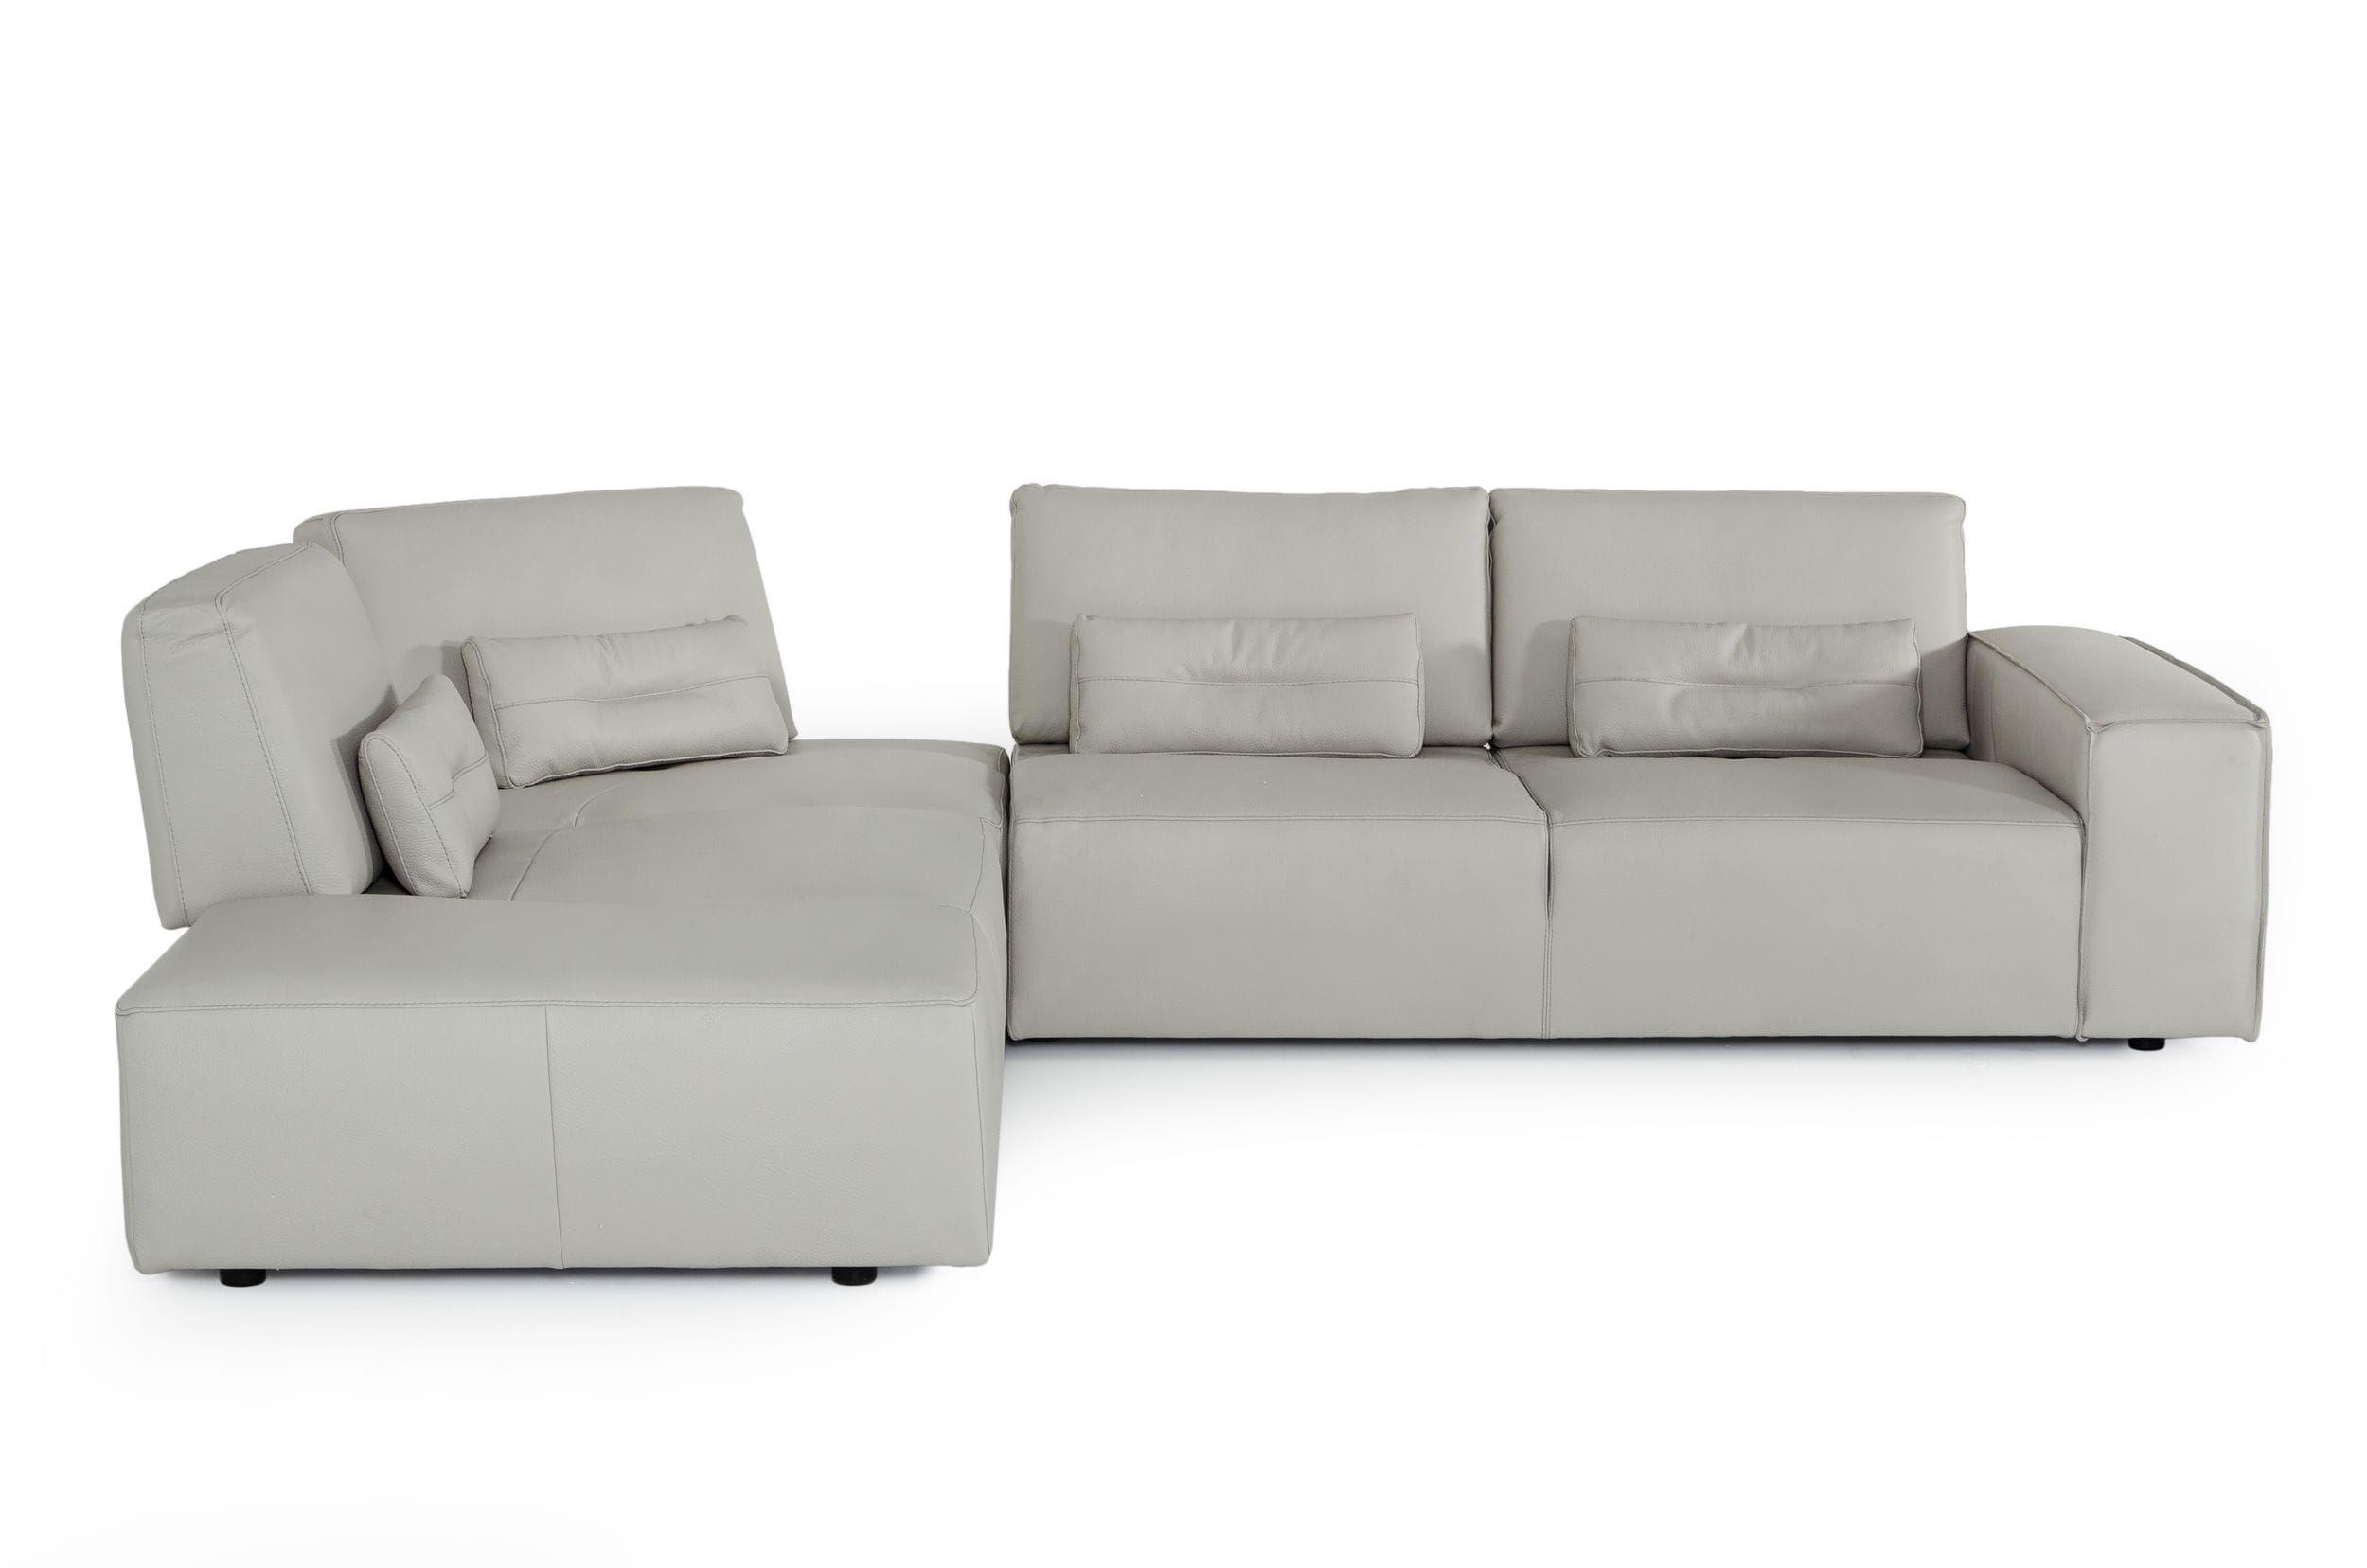 

    
VIG Furniture VGDDENJOY-GRYWHT-SECT Sectional Sofa Gray VGDDENJOY-GRYWHT-SECT
